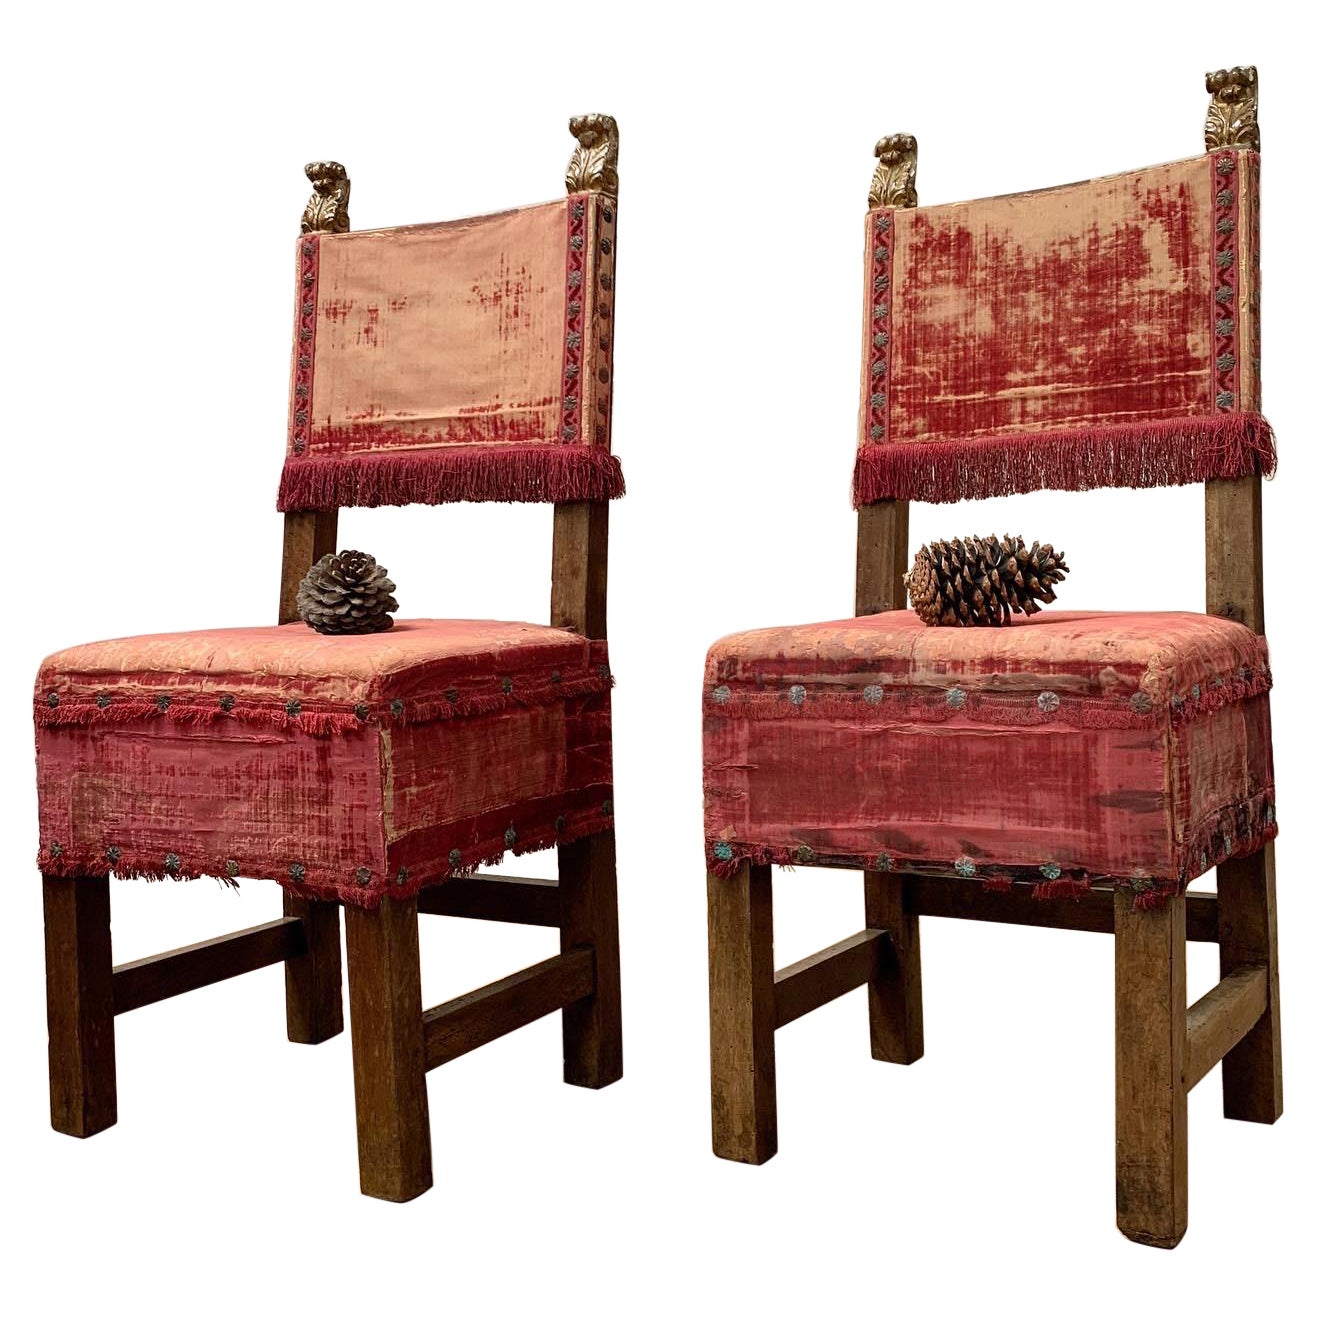 Pair of Seventeenth Century Italian Chairs